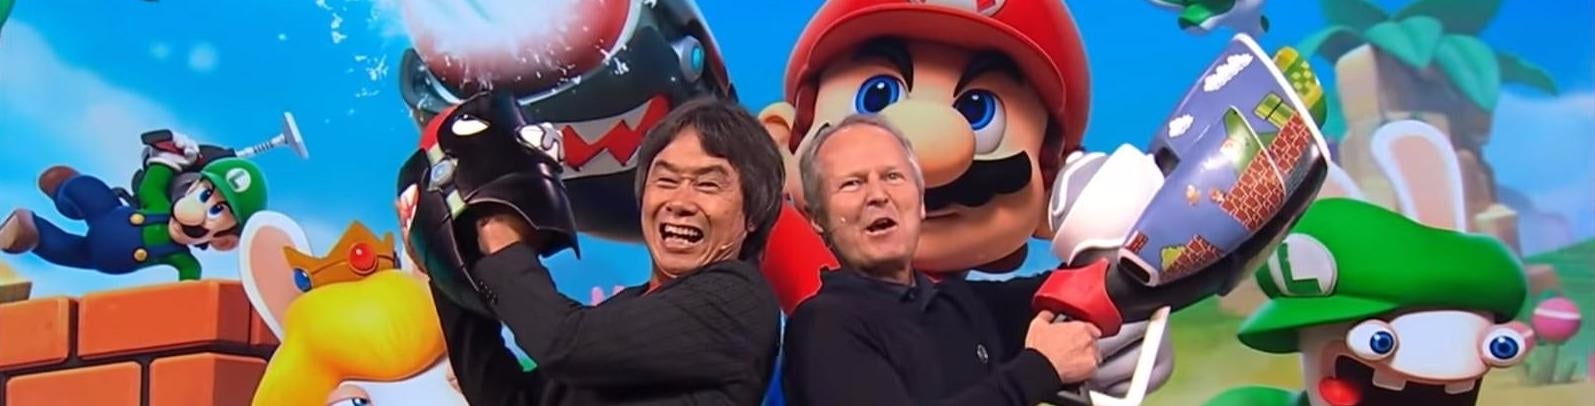 Image for The big interview: Shigeru Miyamoto and Ubisoft's Yves Guillemot